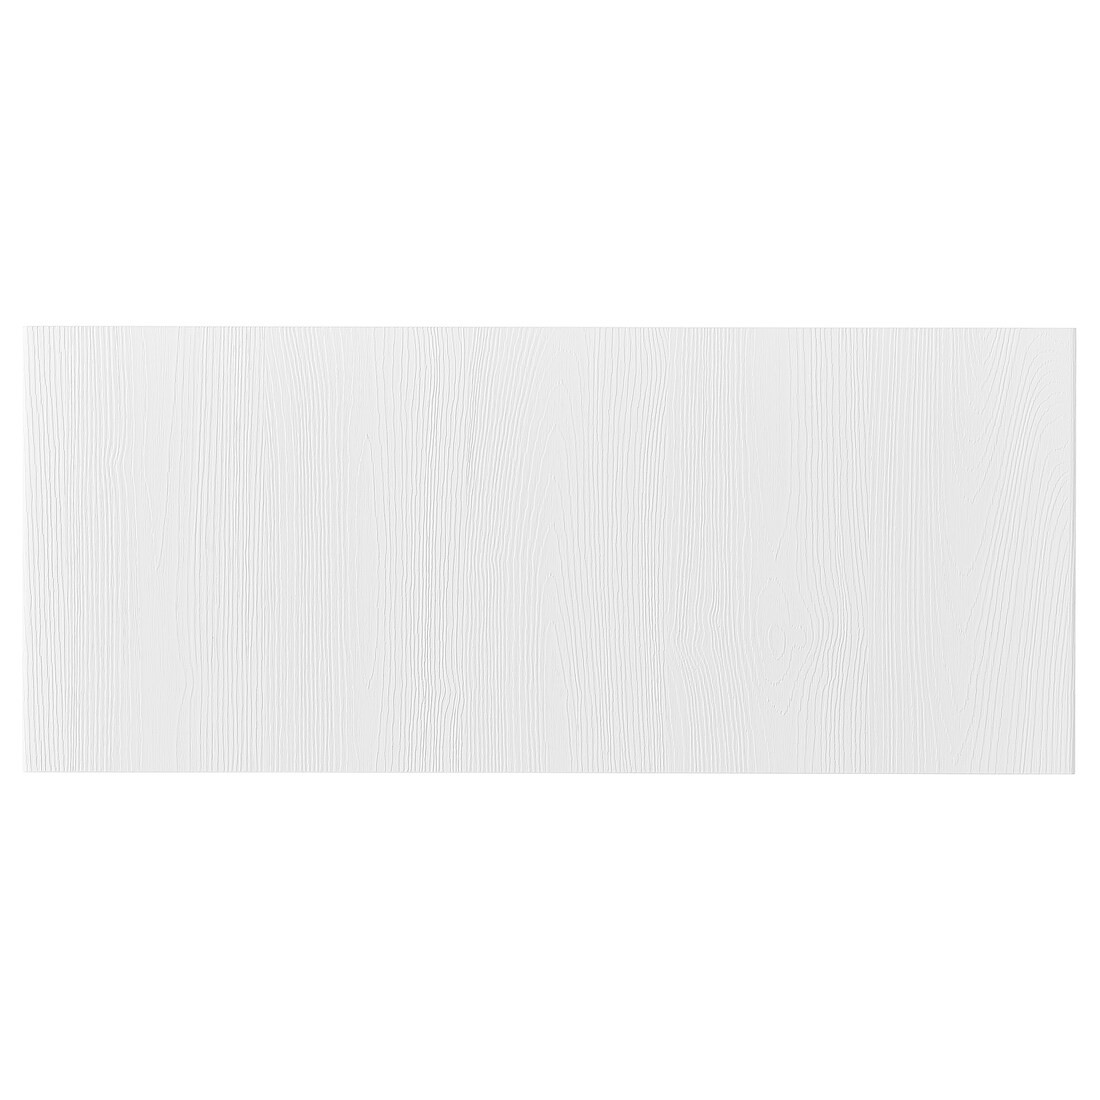 IKEA TIMMERVIKEN ТИММЕРВИКЕН Фронтальная панель ящика, белый, 60x26 см 20488165 204.881.65